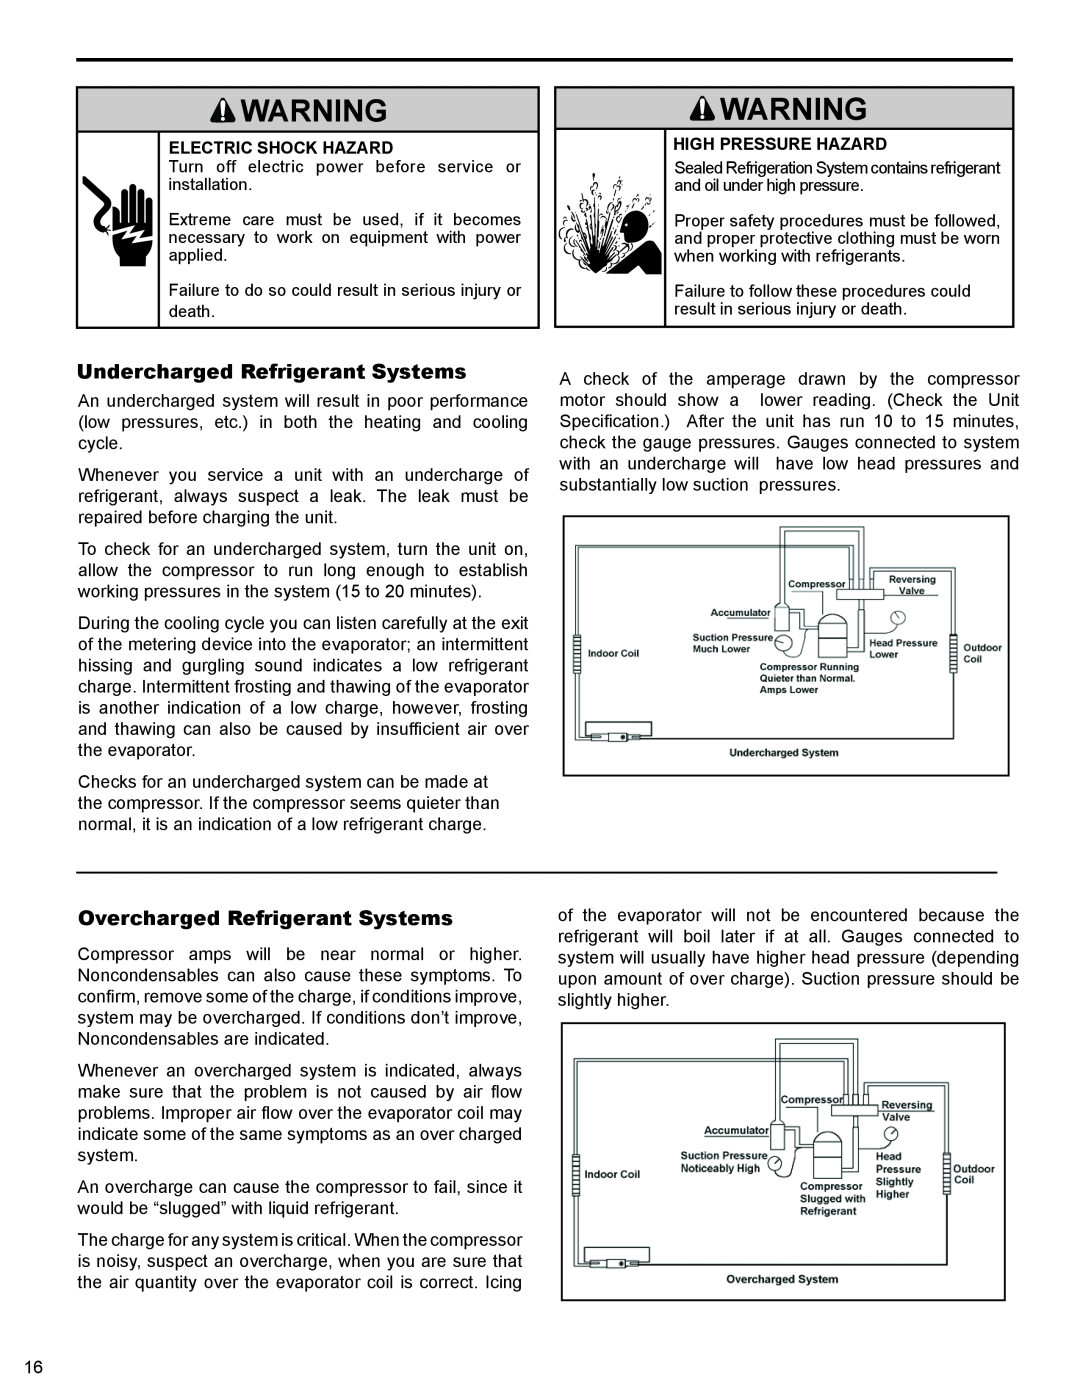 Friedrich R-410A service manual Undercharged Refrigerant Systems, Overcharged Refrigerant Systems, Electric Shock Hazard 